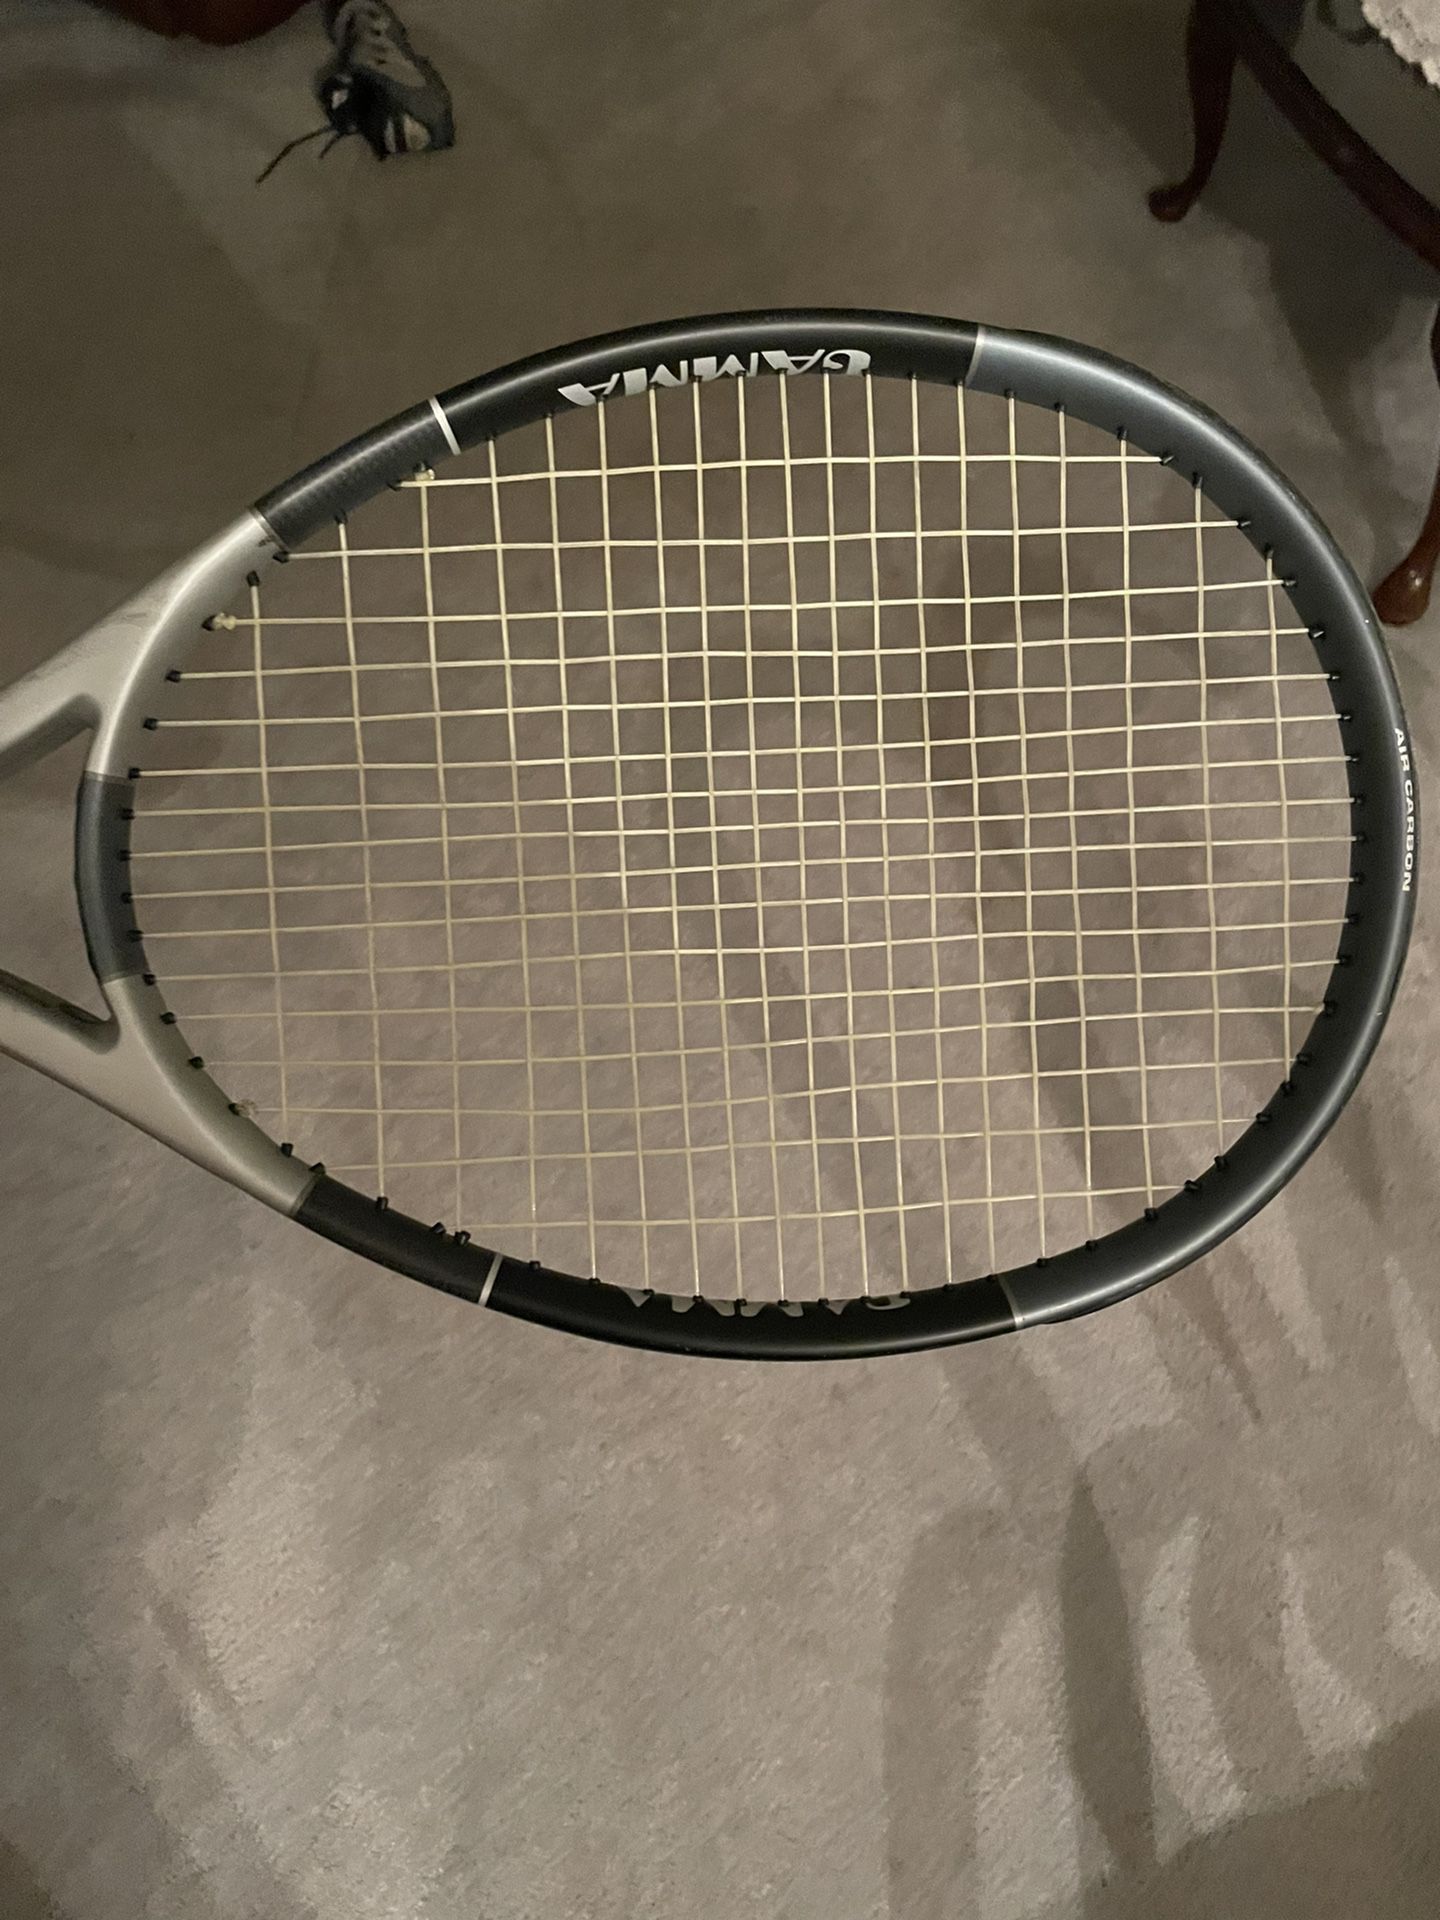 Carbon Tennis Racket - Gamma